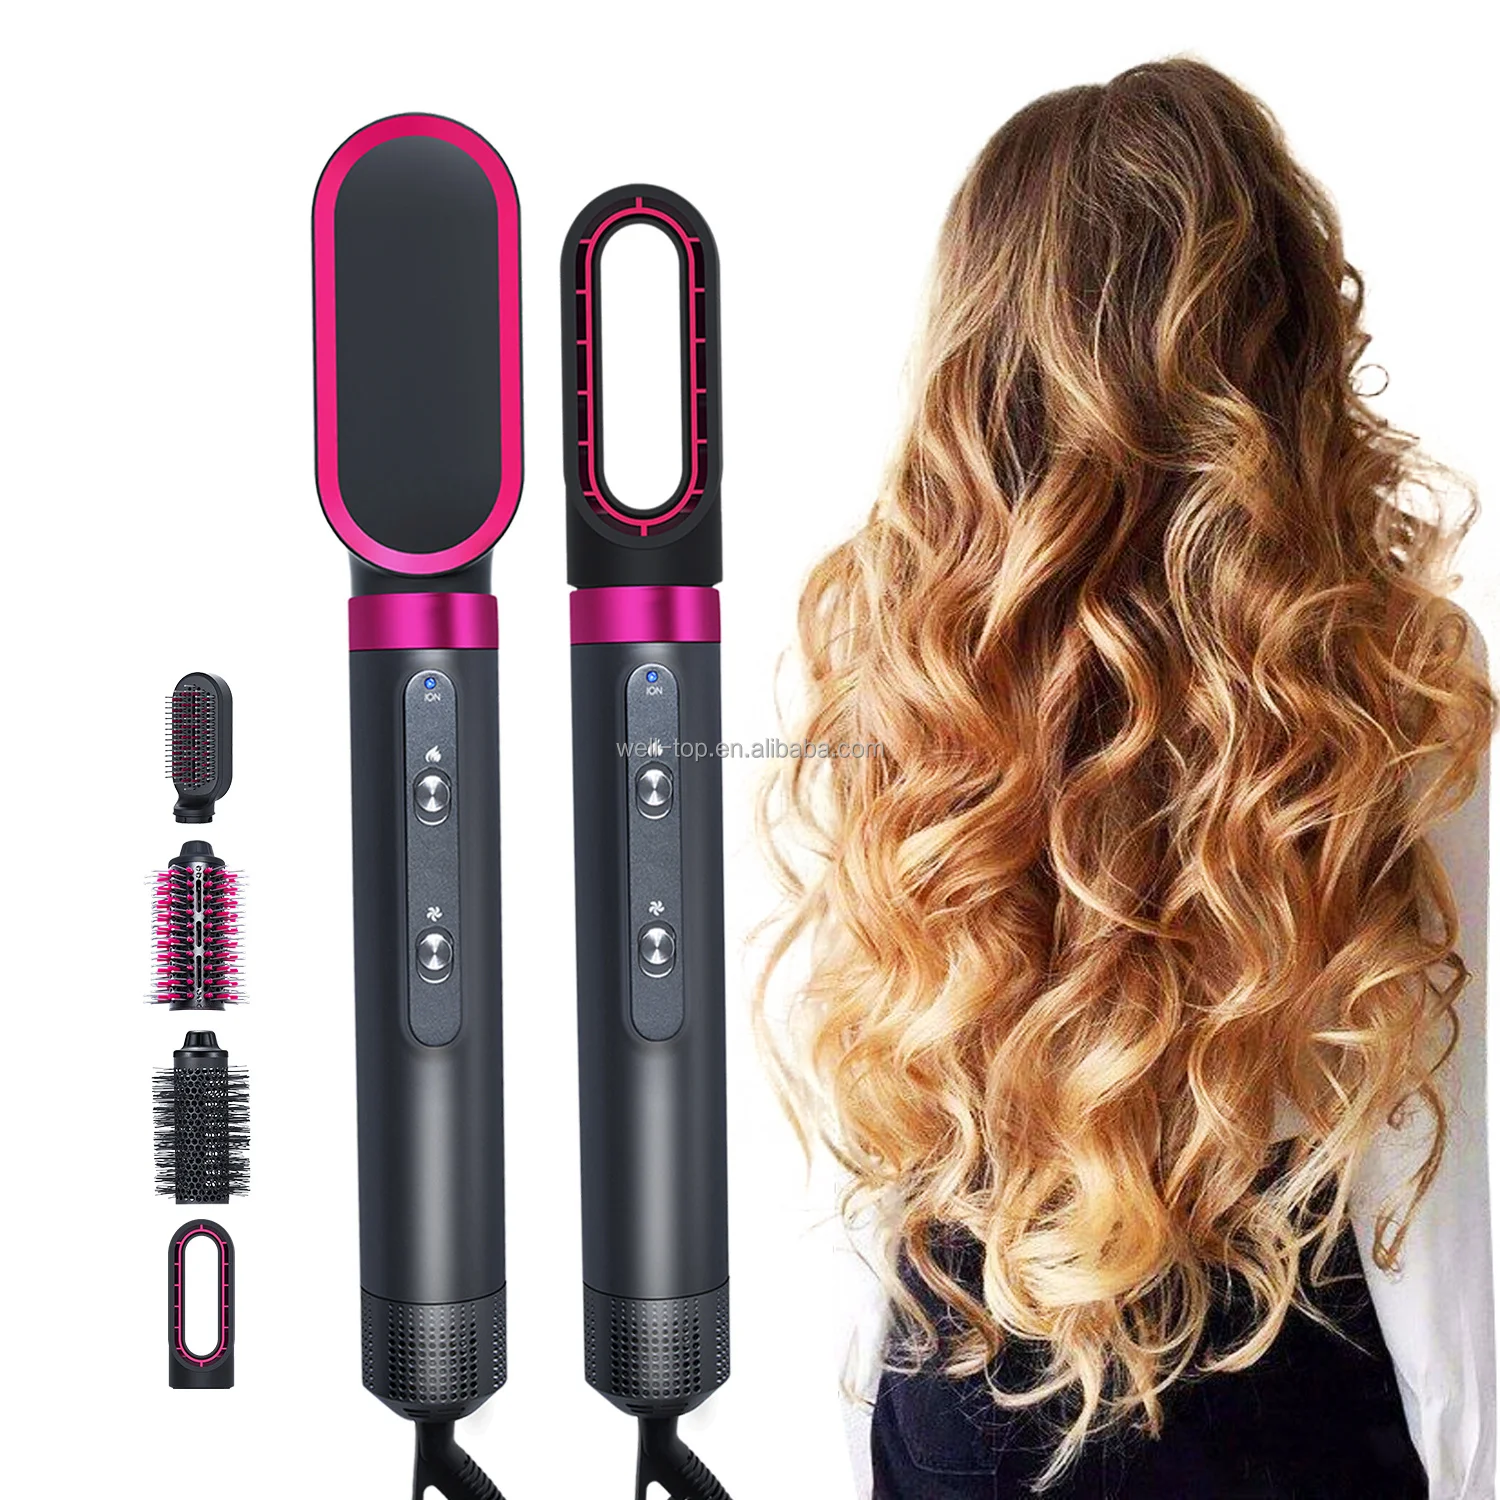 Wholesale 5 In 1 One Step Hair Straightener Curler Comb Hair Dryer Brush  For Women hair curler styler From malibabacom